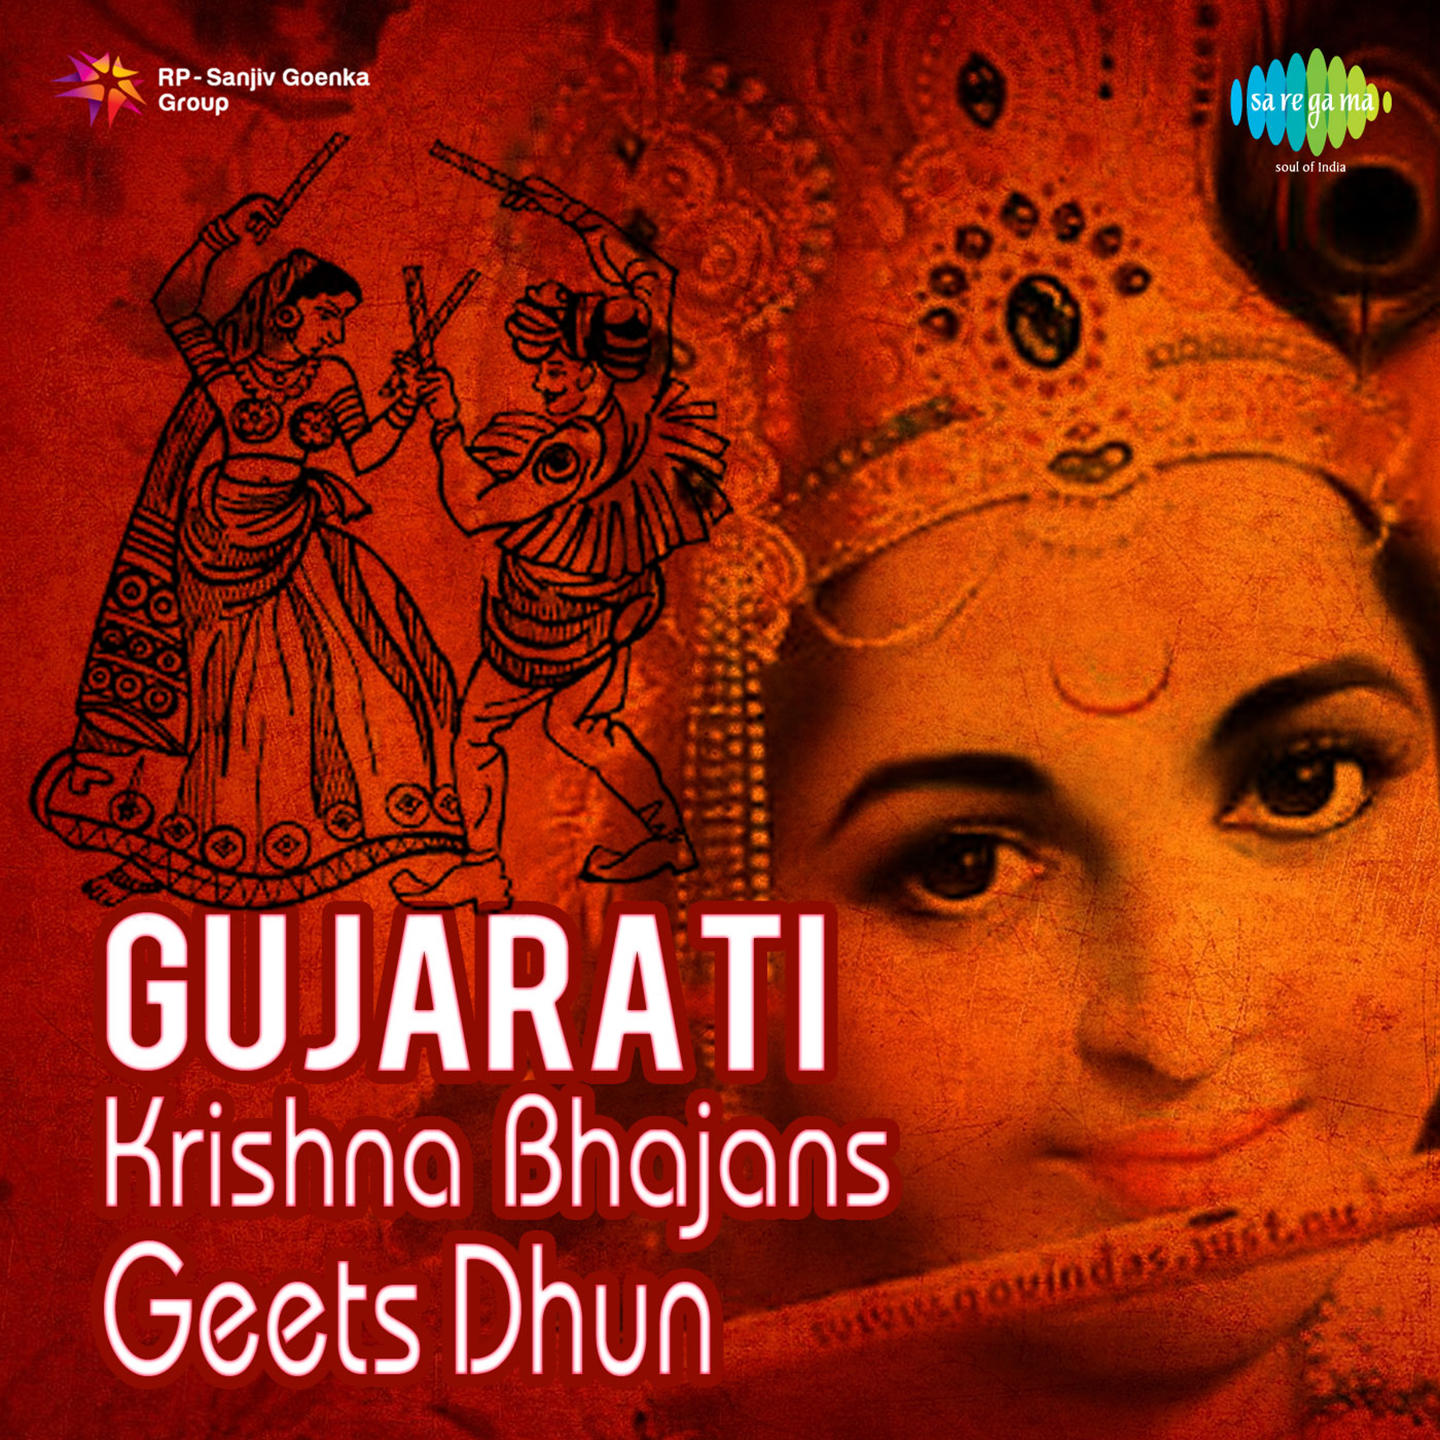 Gujarati Krishna Bhajans Geets Dhun